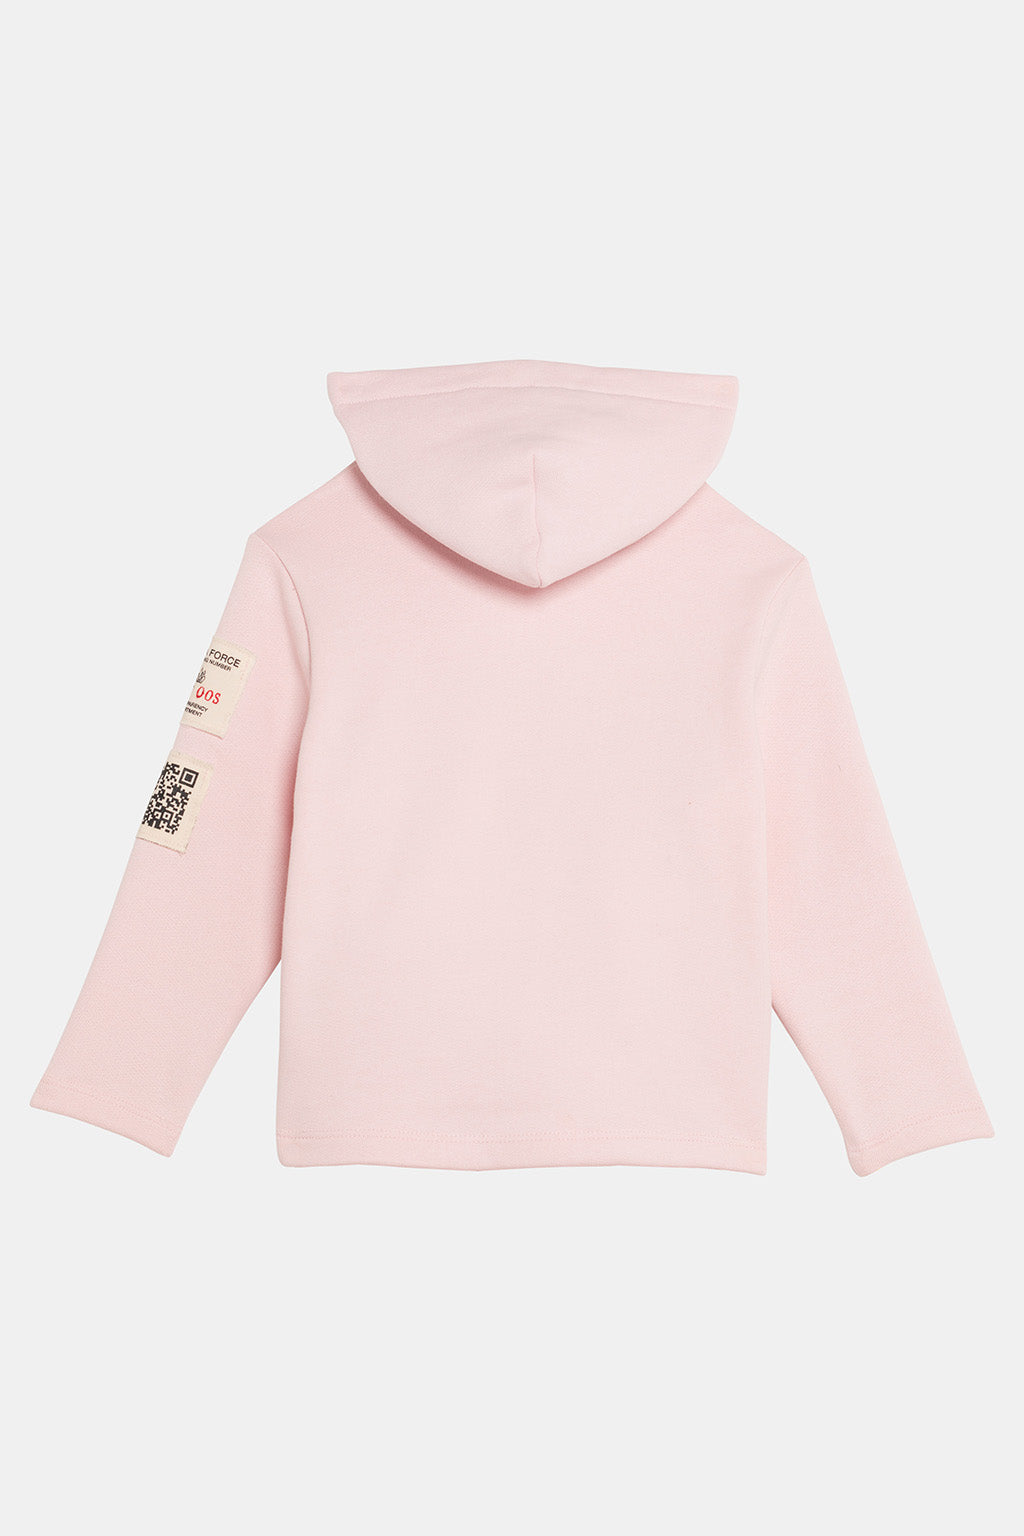 organic cotton pink baby hoodie